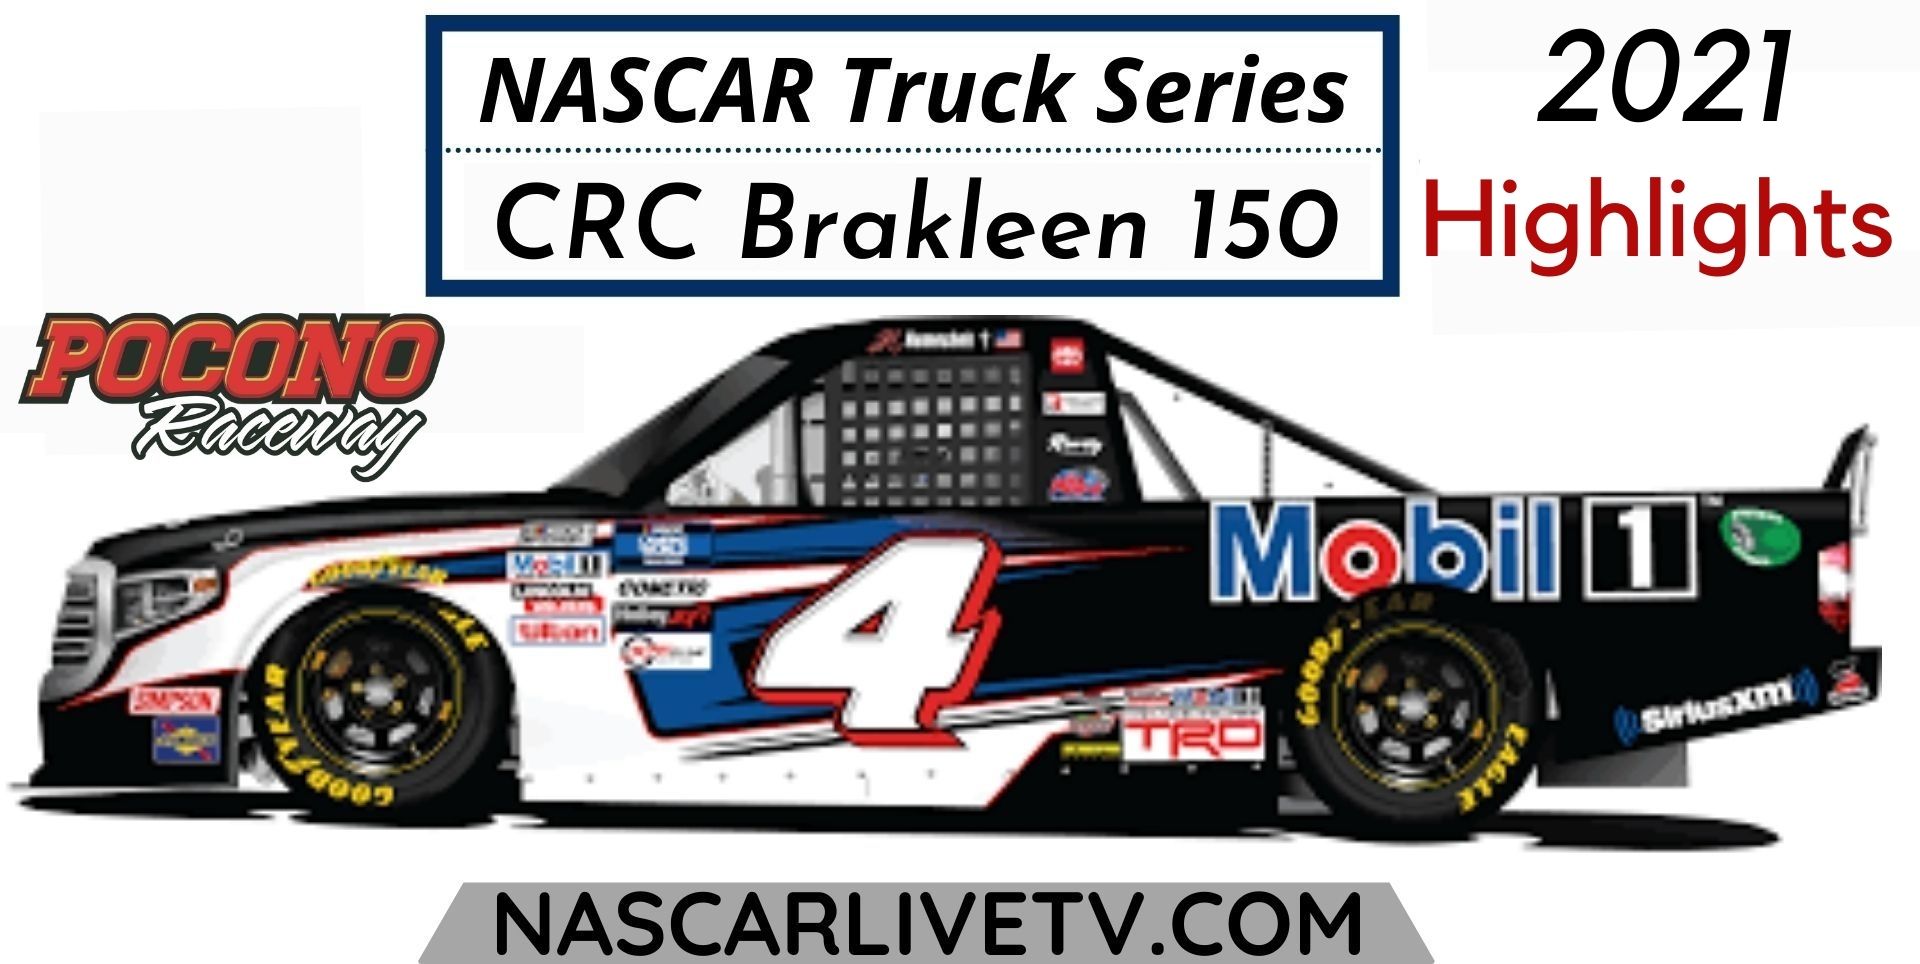 Crc Brakleen 150 Highlights Nascar Truck Series 2021